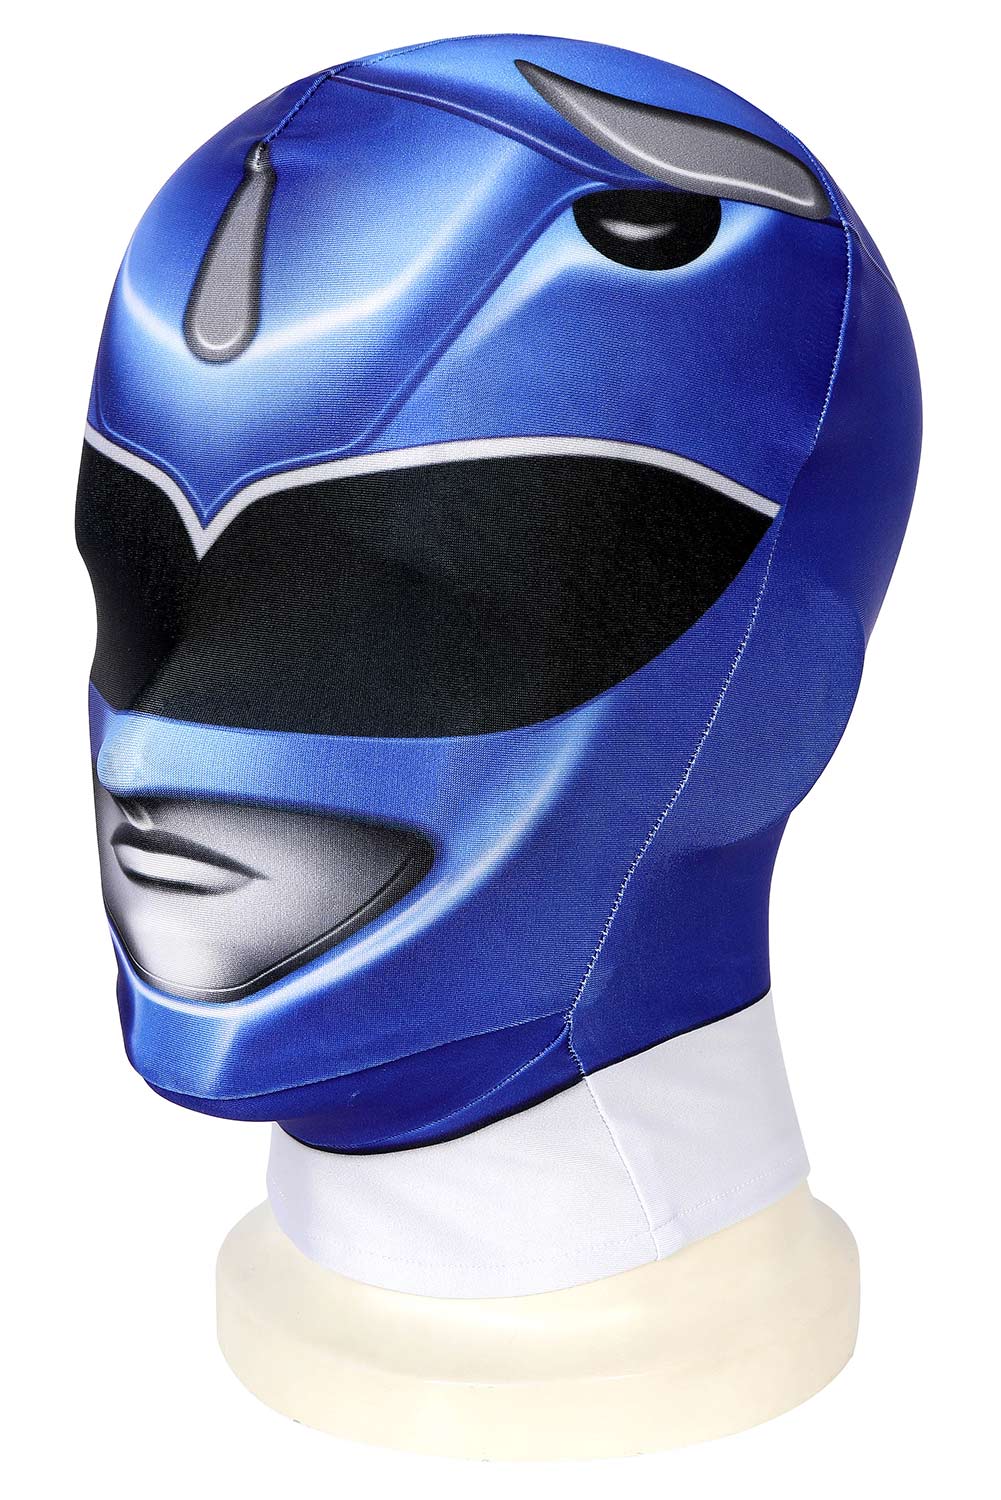 Power Rangers : Mighty Morphin Ranger Bleu Combinaison Cosplay Costume